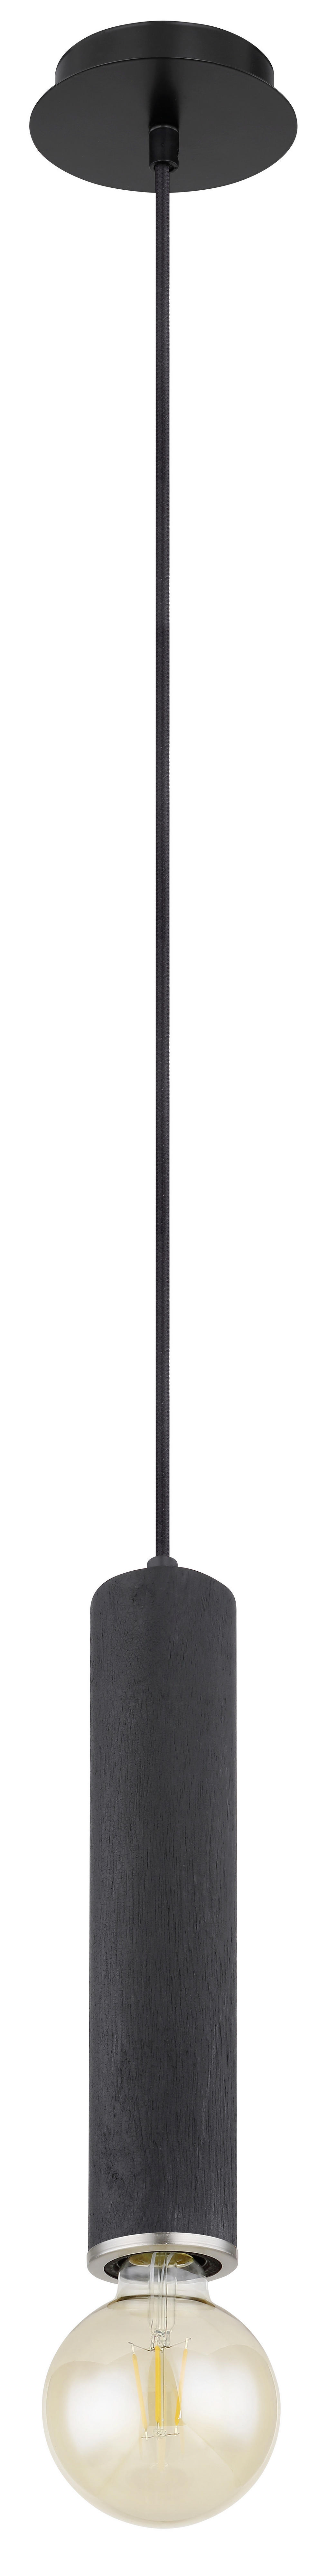 Globo ZÁVĚSNÉ SVÍTIDLO, E27/60 W, 12/160 cm - černá,barvy niklu